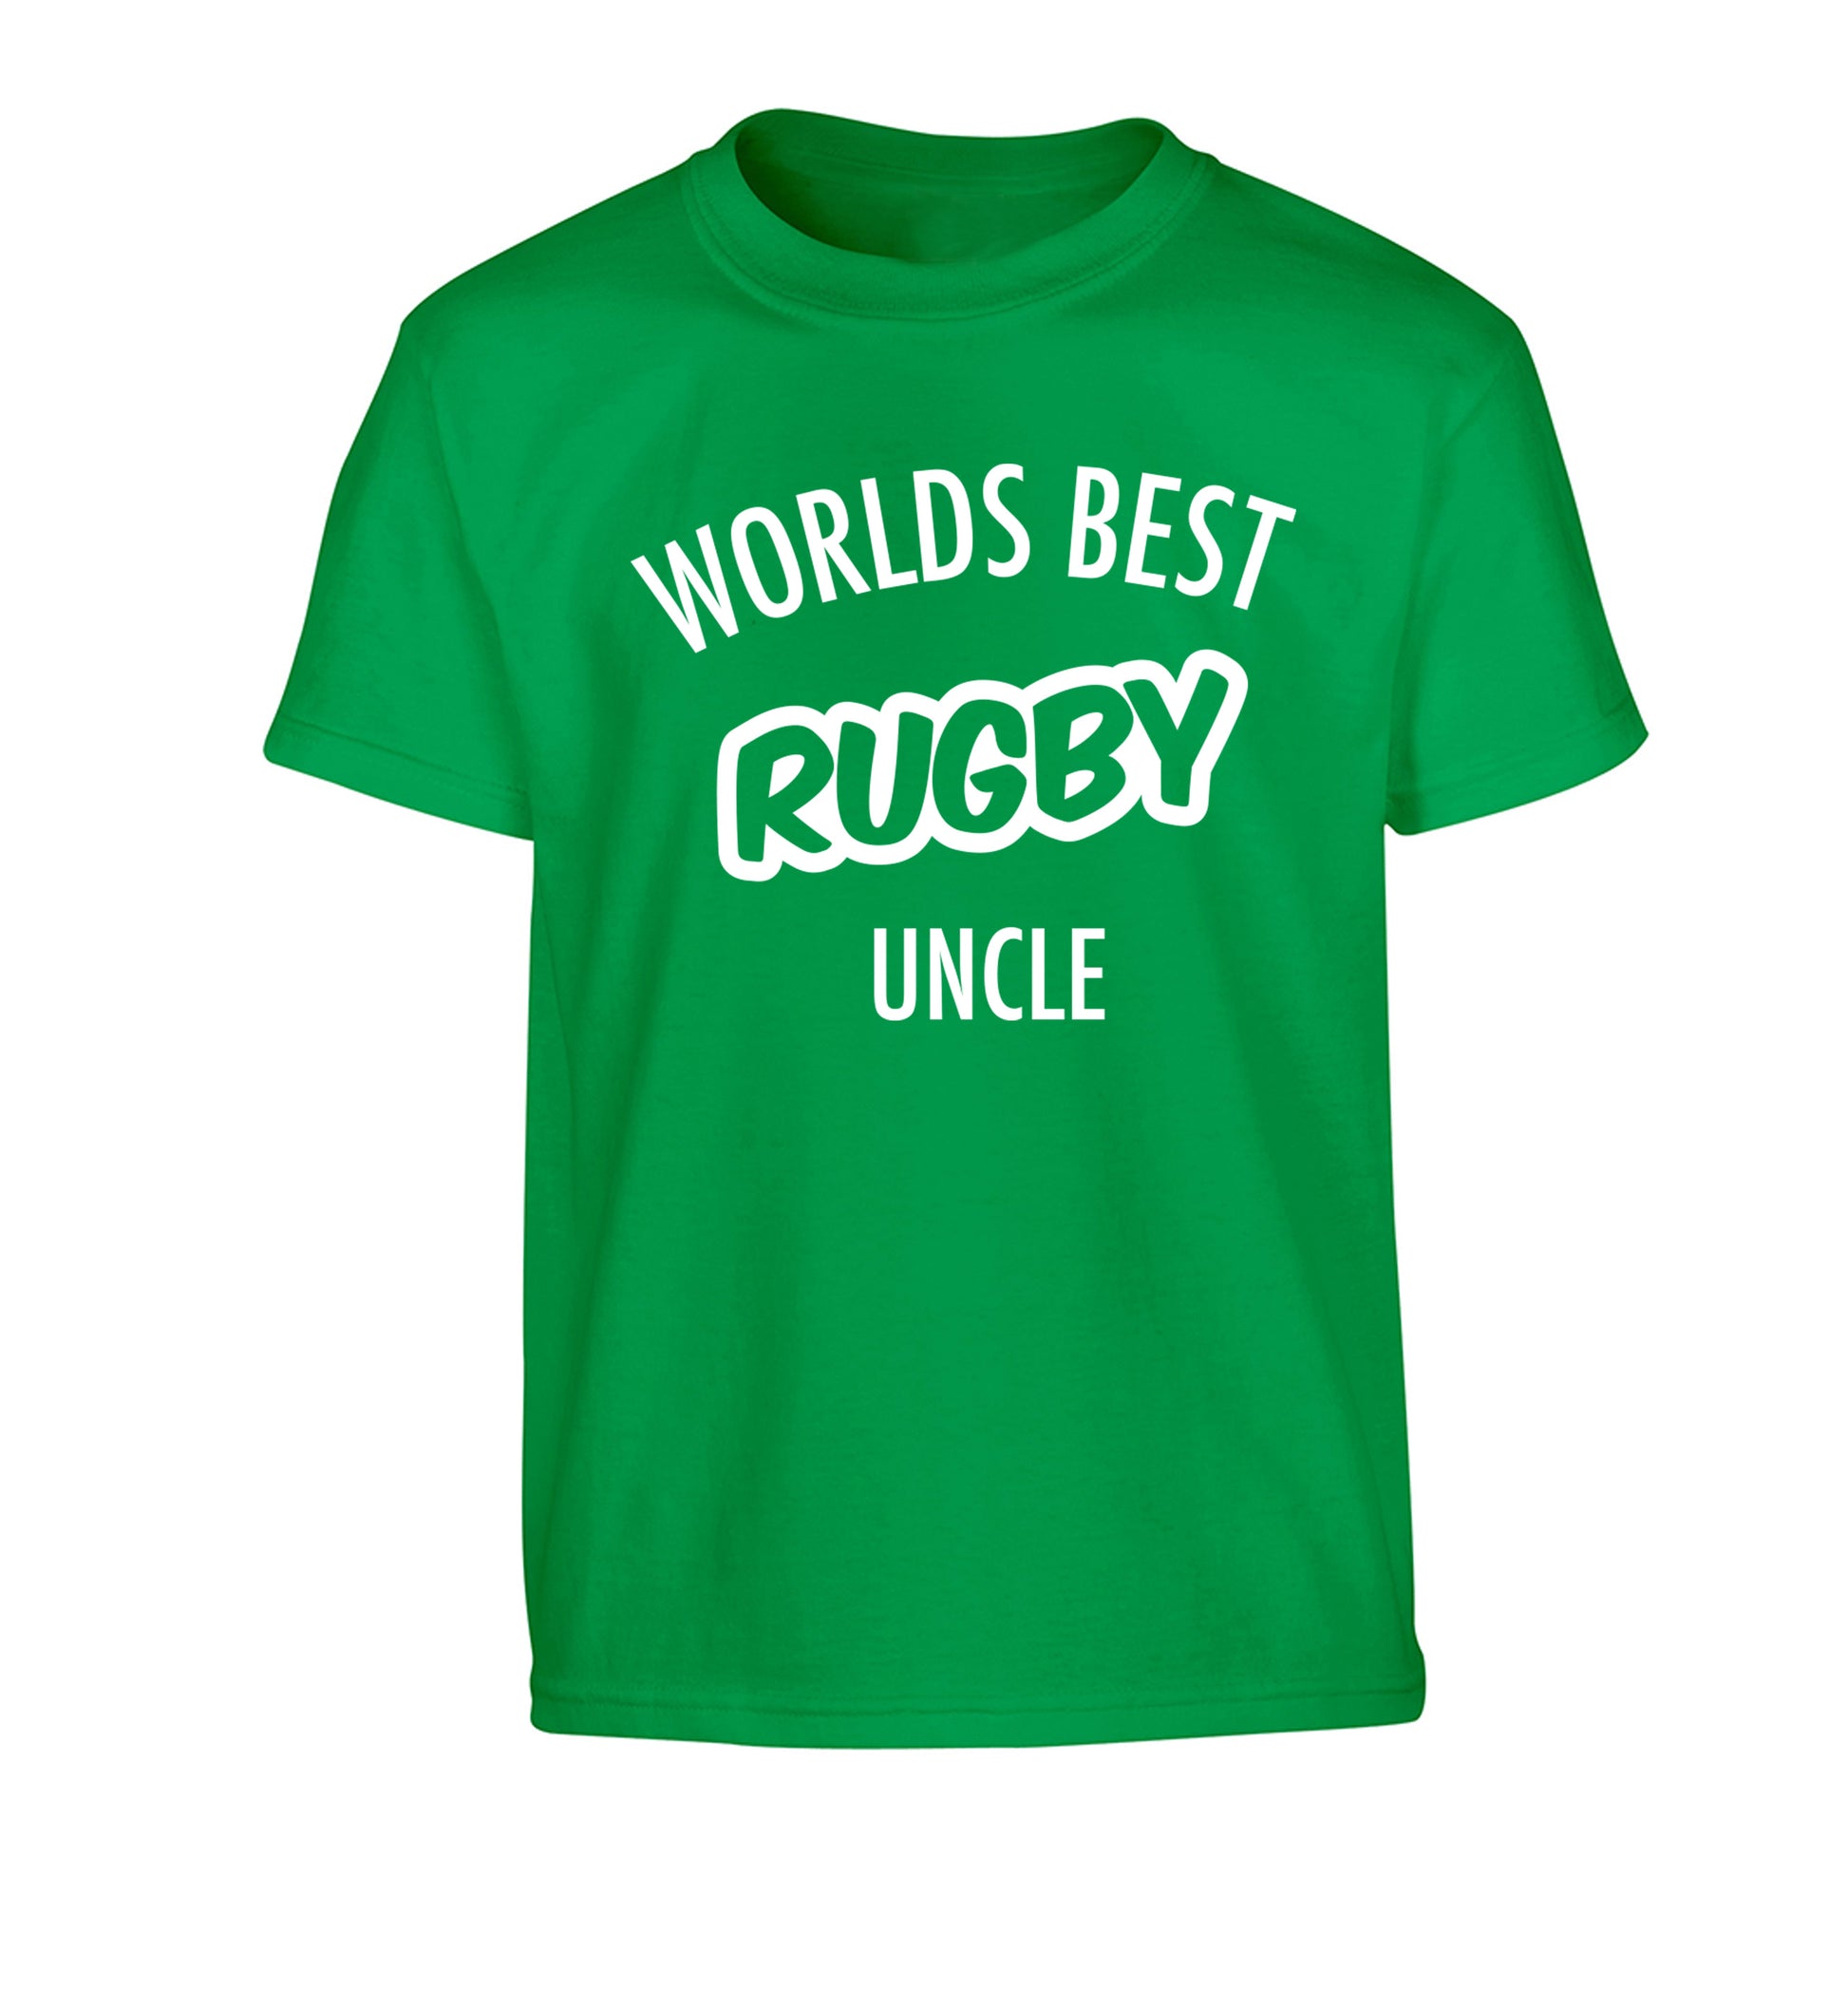 Worlds best rugby uncle Children's green Tshirt 12-13 Years